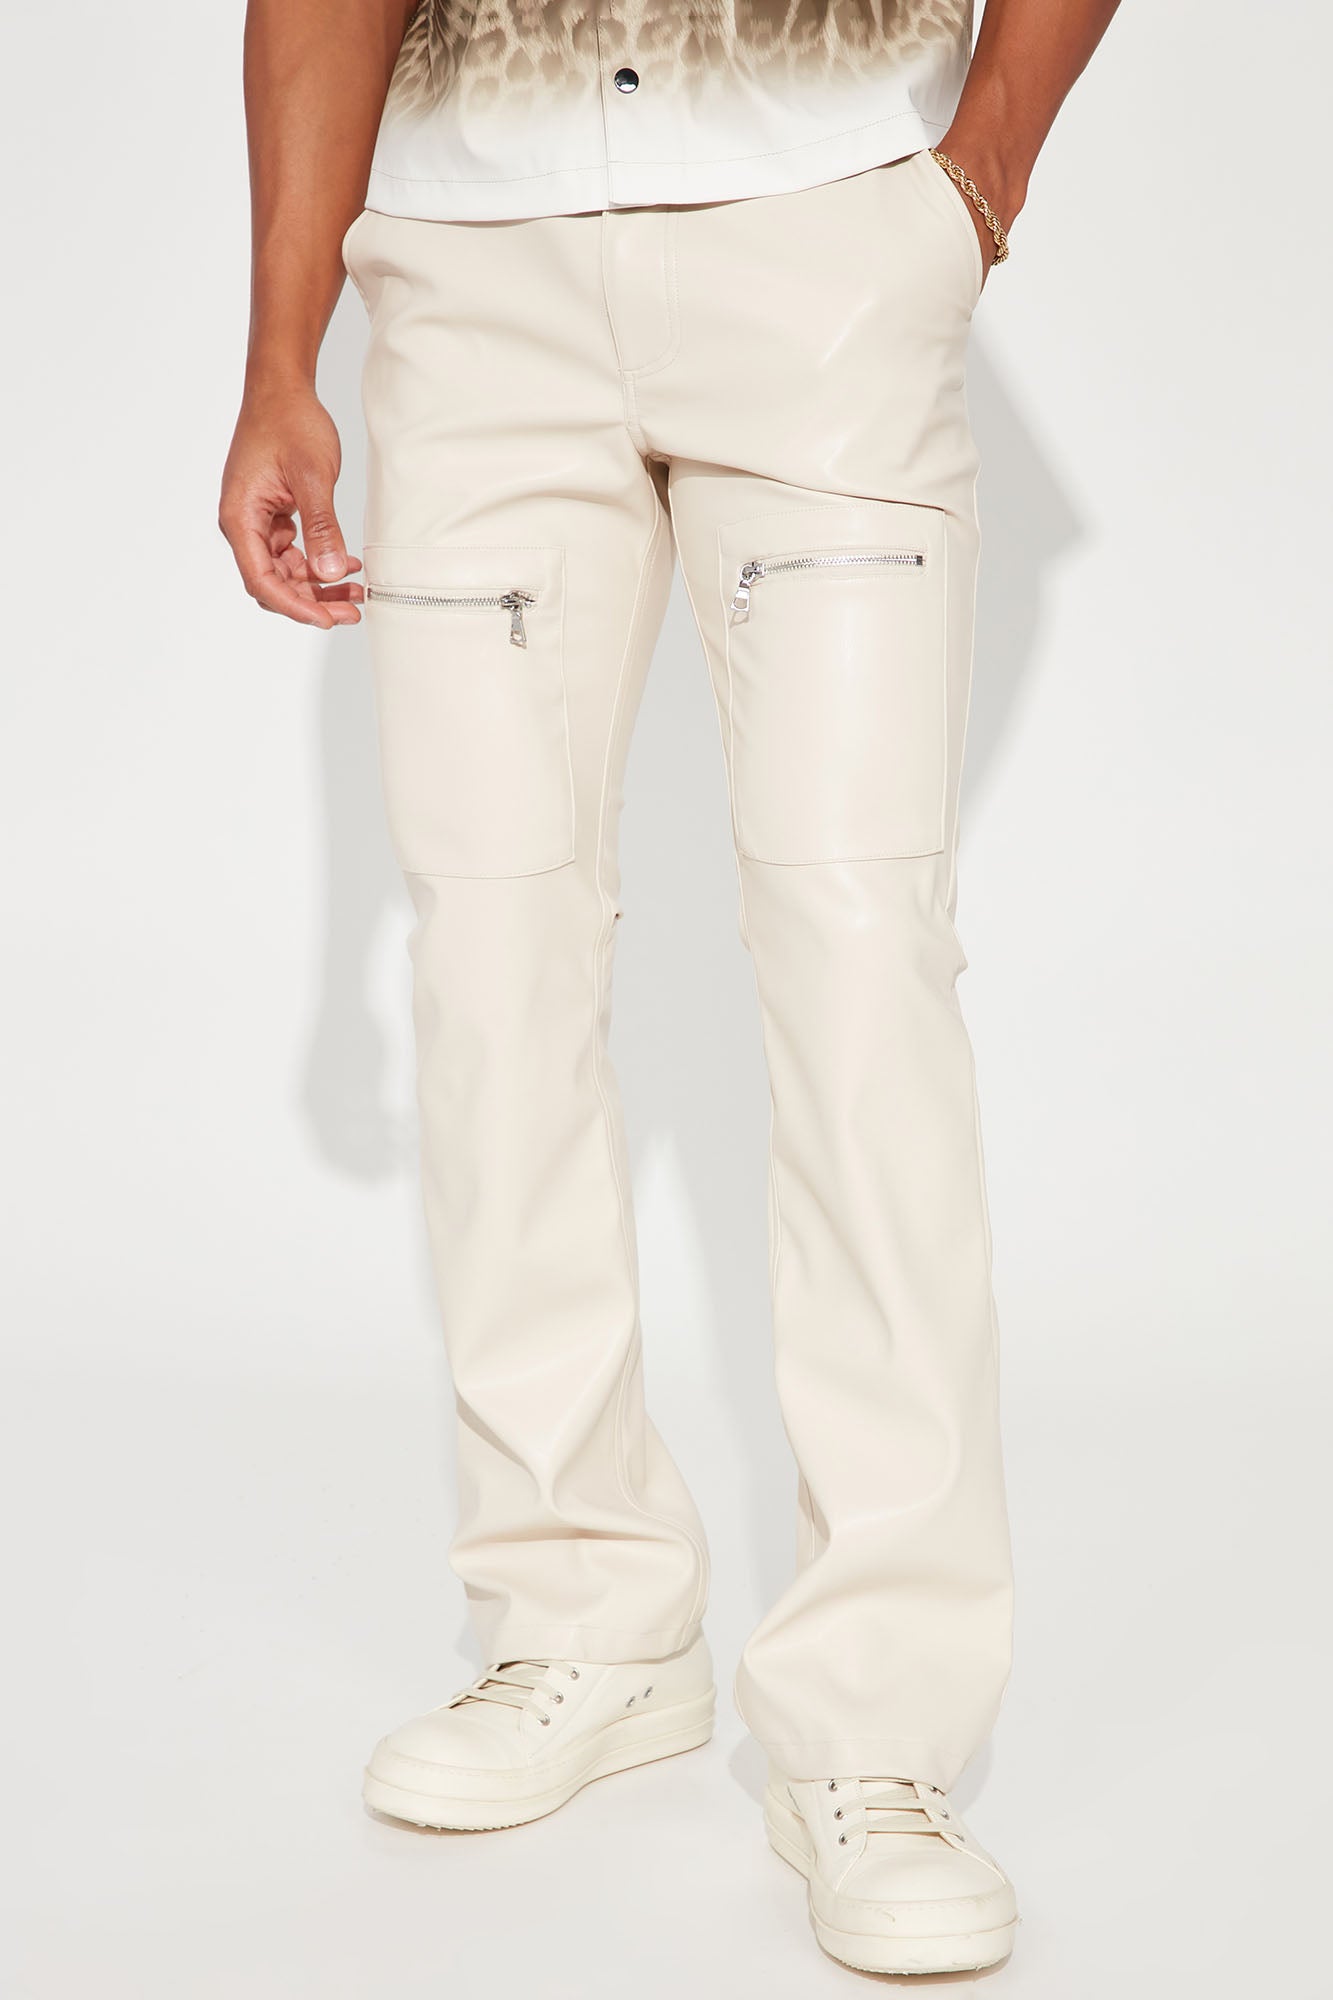 Off White Leather Pants Men - Slim Fit Faux Leather Pants